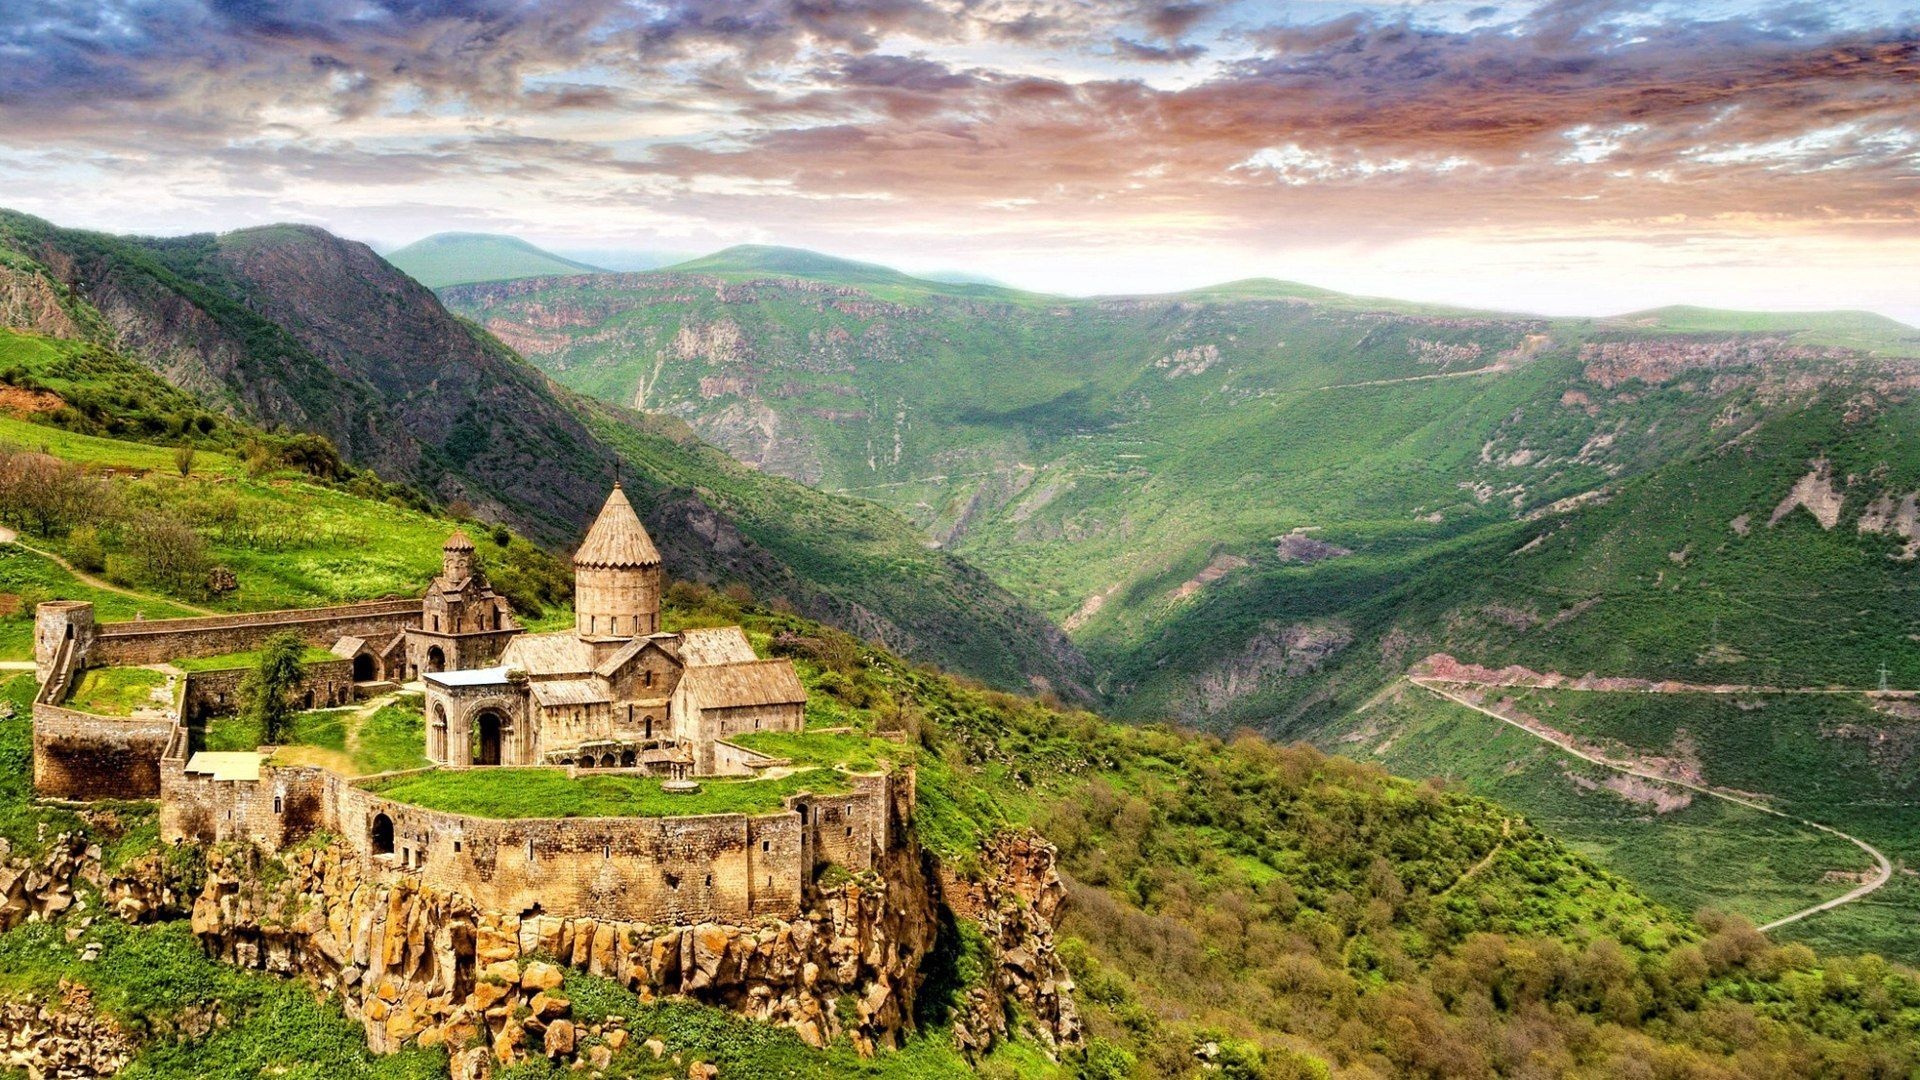 Armenia: Tatev, Known as the bishopric seat of Syunik. 1920x1080 Full HD Wallpaper.